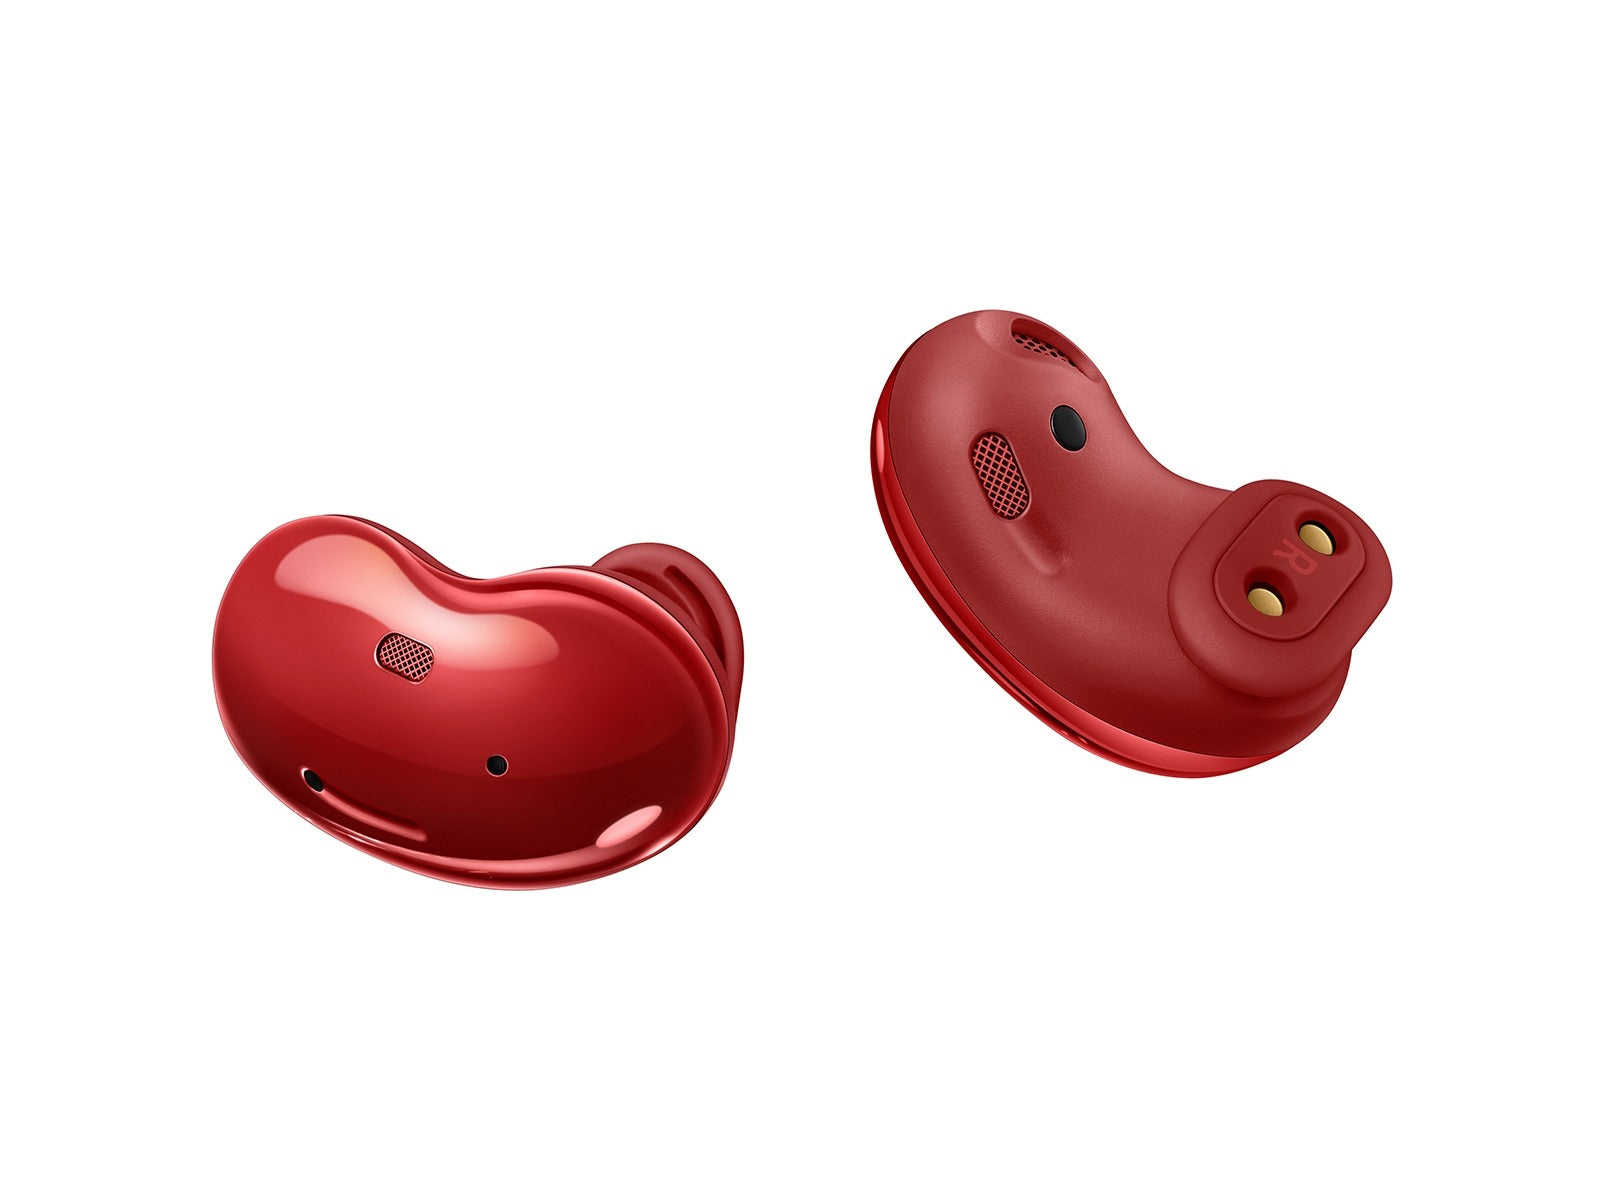 Samsung Galaxy Buds Live True Wireless Bluetooth Earbud Headphones - Mystic Red (New)